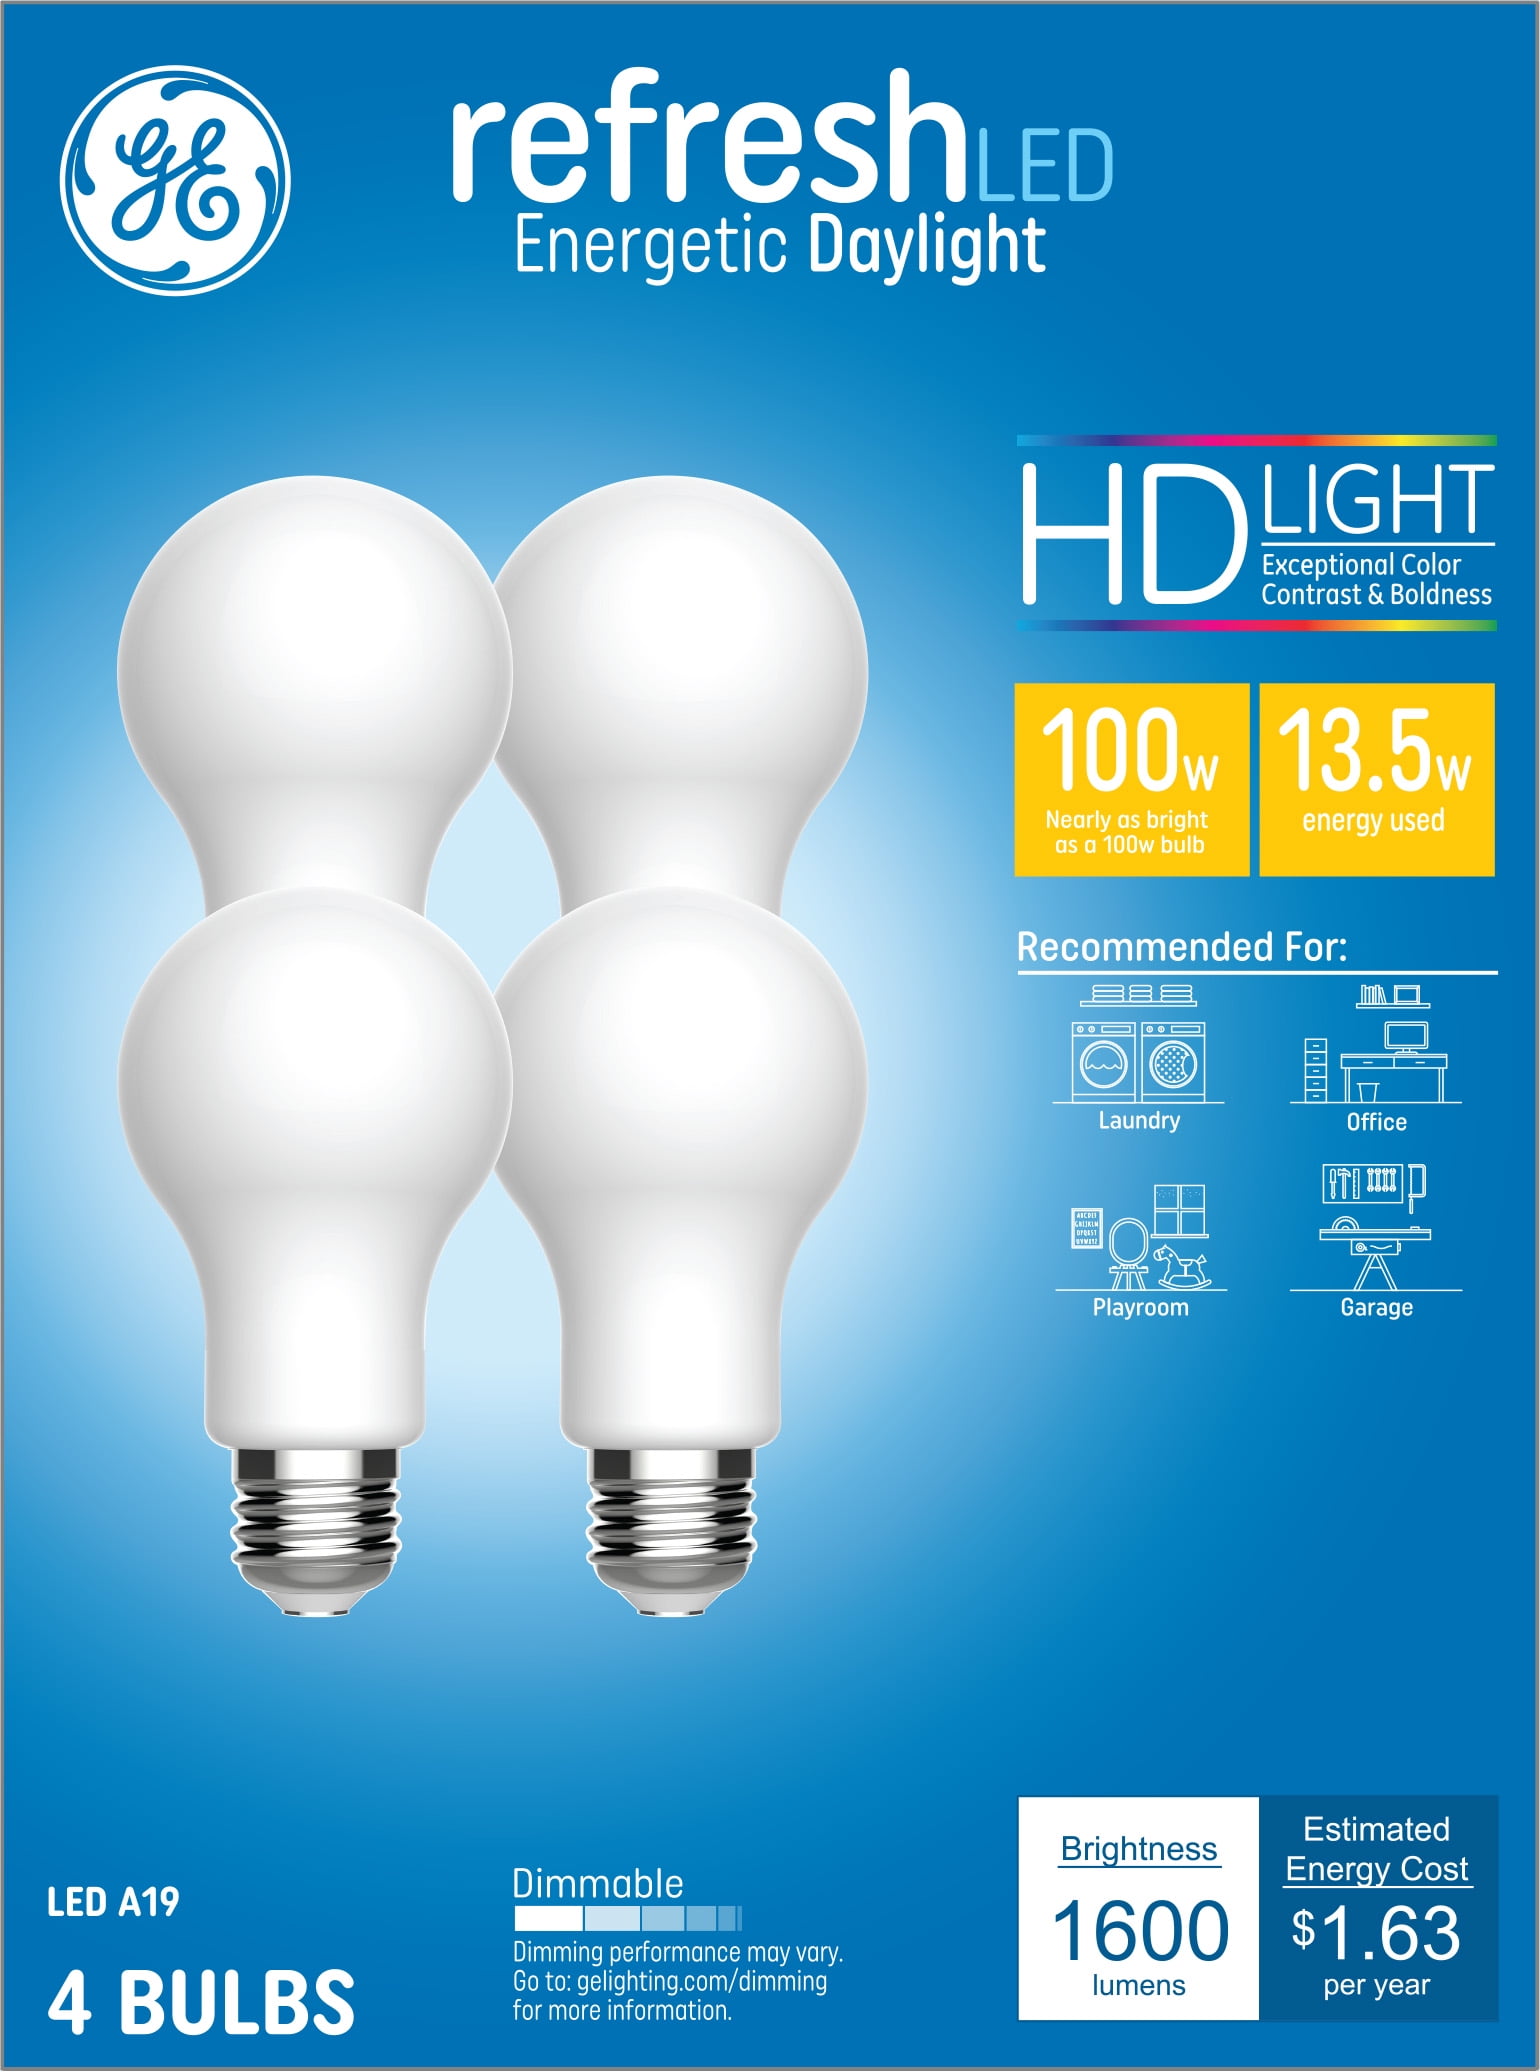 GE LED Bulb Light Daylight 60 Watt Dimmable Refresh HD A19 2 Packs, 8 Bulbs 